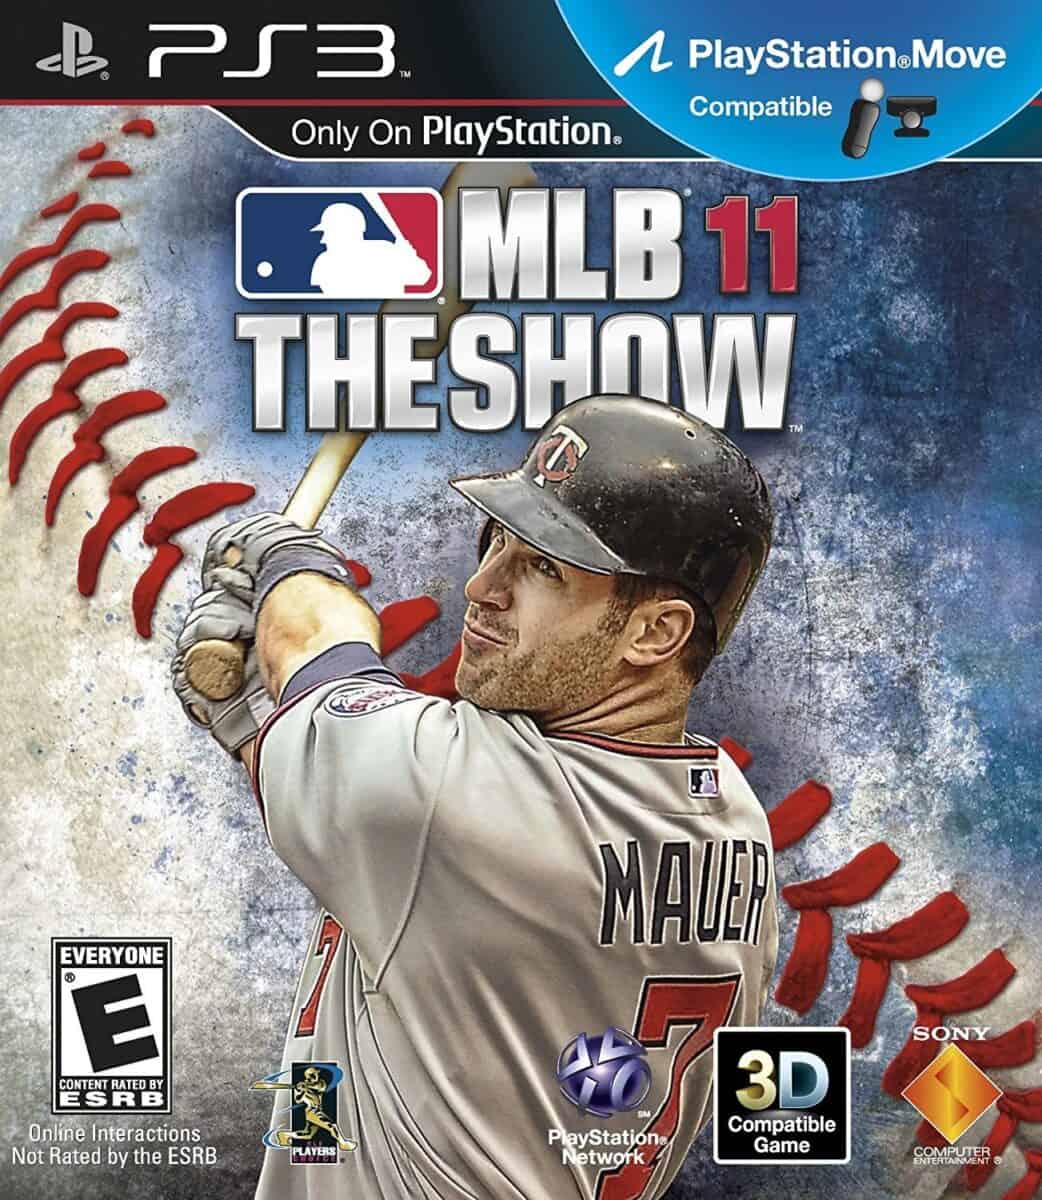 PlayStation 3 sports games